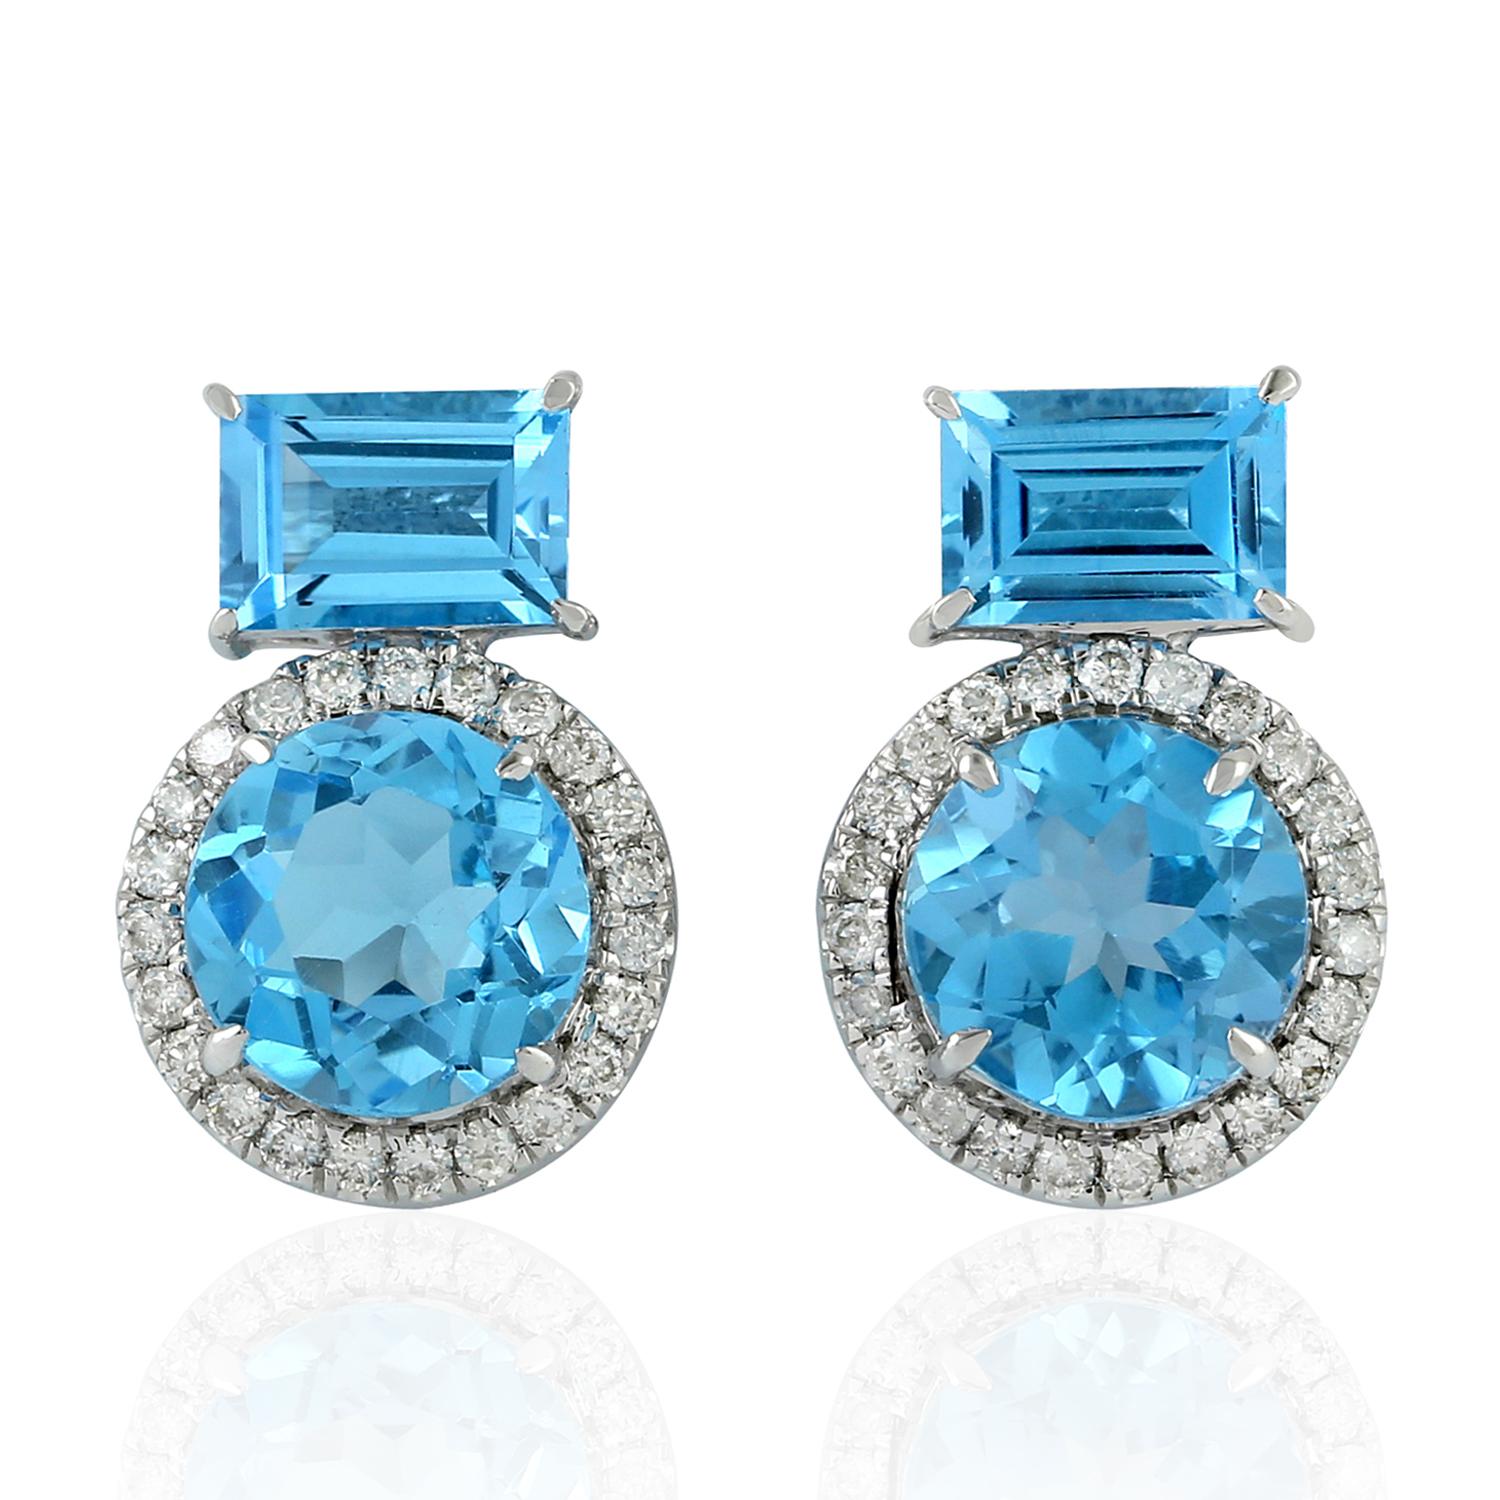 Mixed Cut Blue Topaz Diamond 18 Karat Gold Stud Earrings For Sale